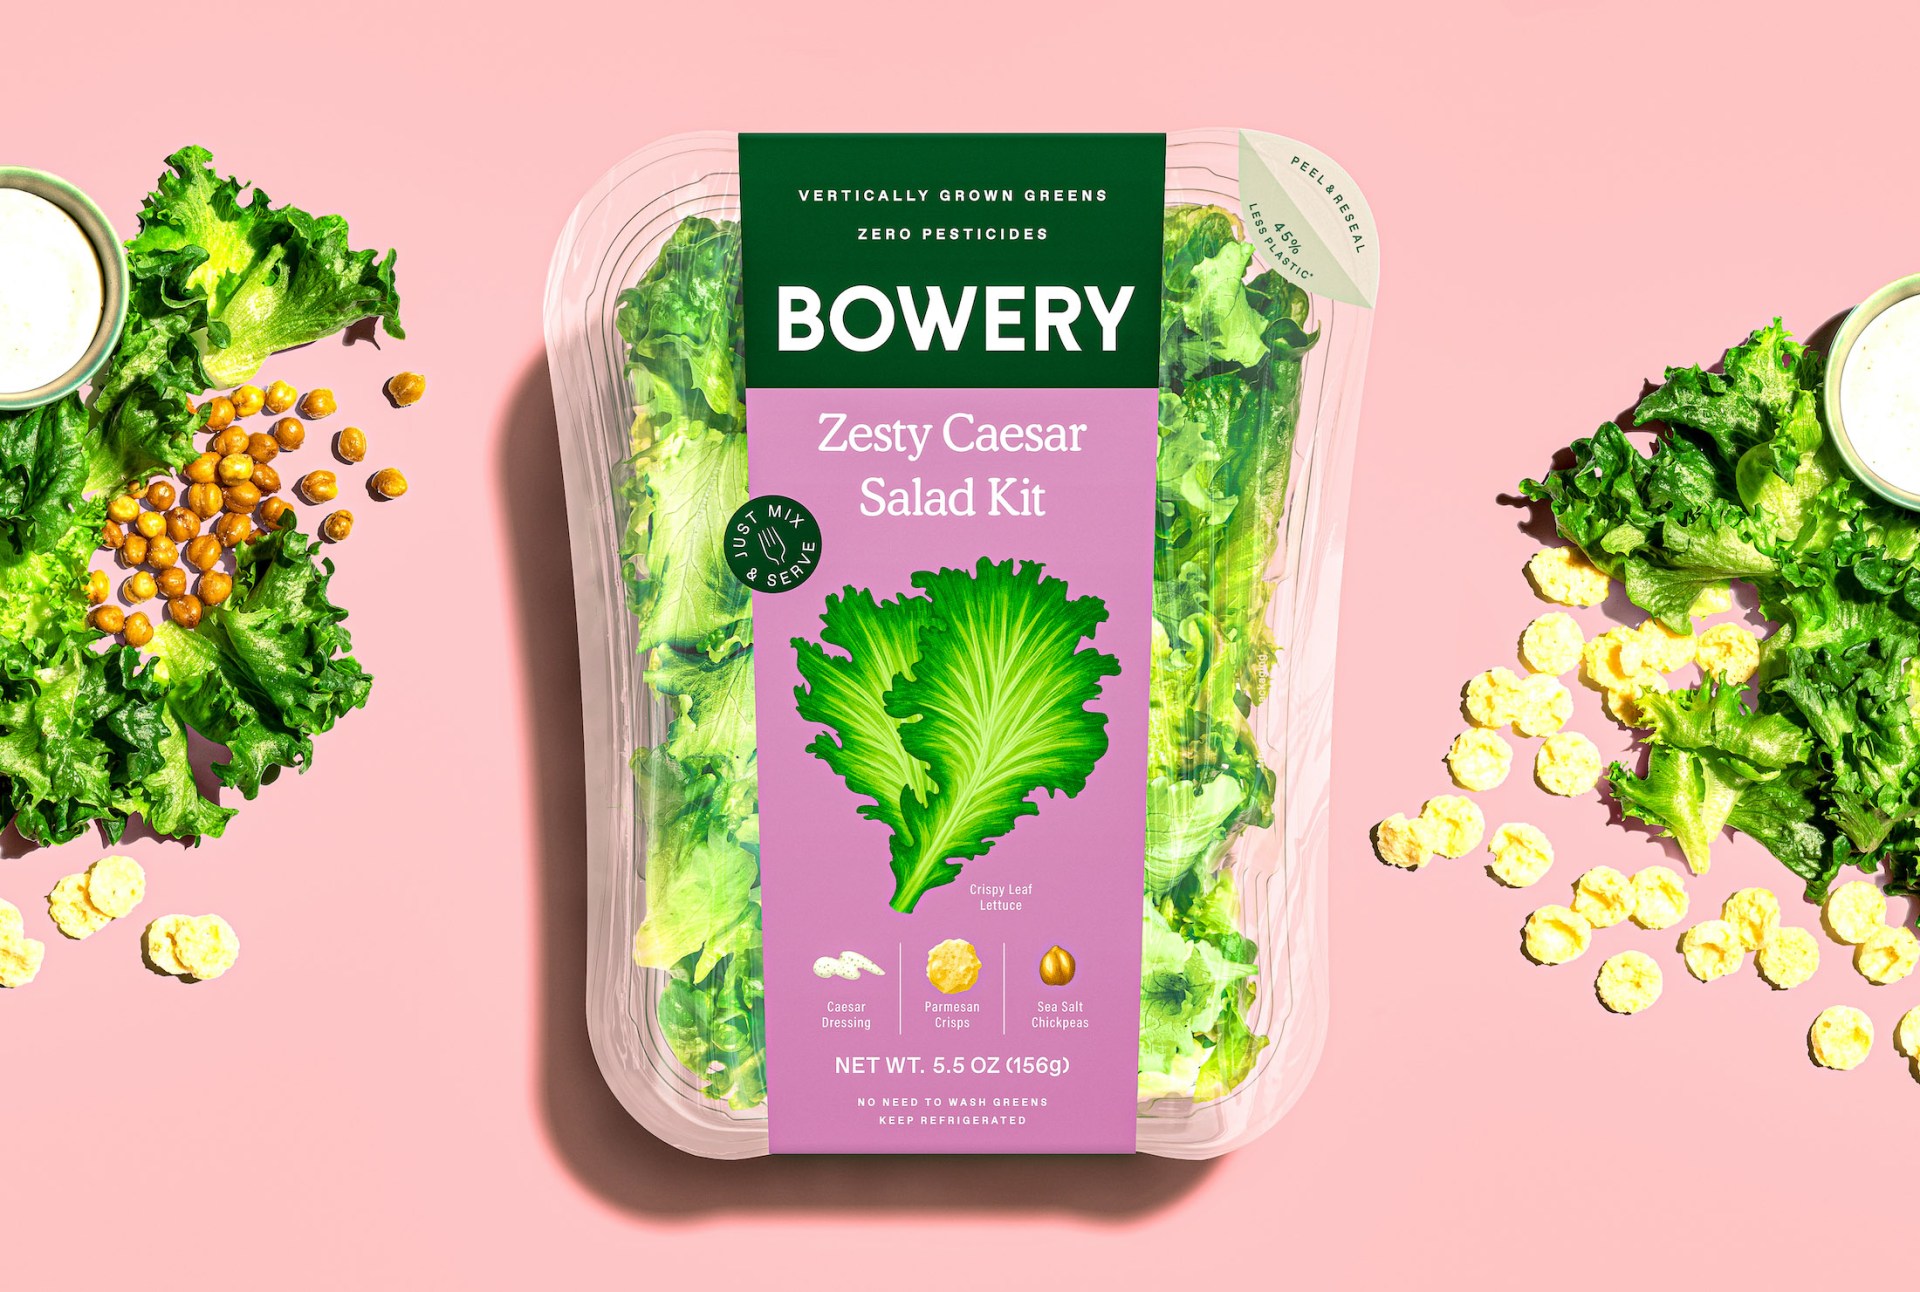 Bowery 垂直农业农场品牌蔬菜沙拉农产品包装设计，彩绘蔬菜图案